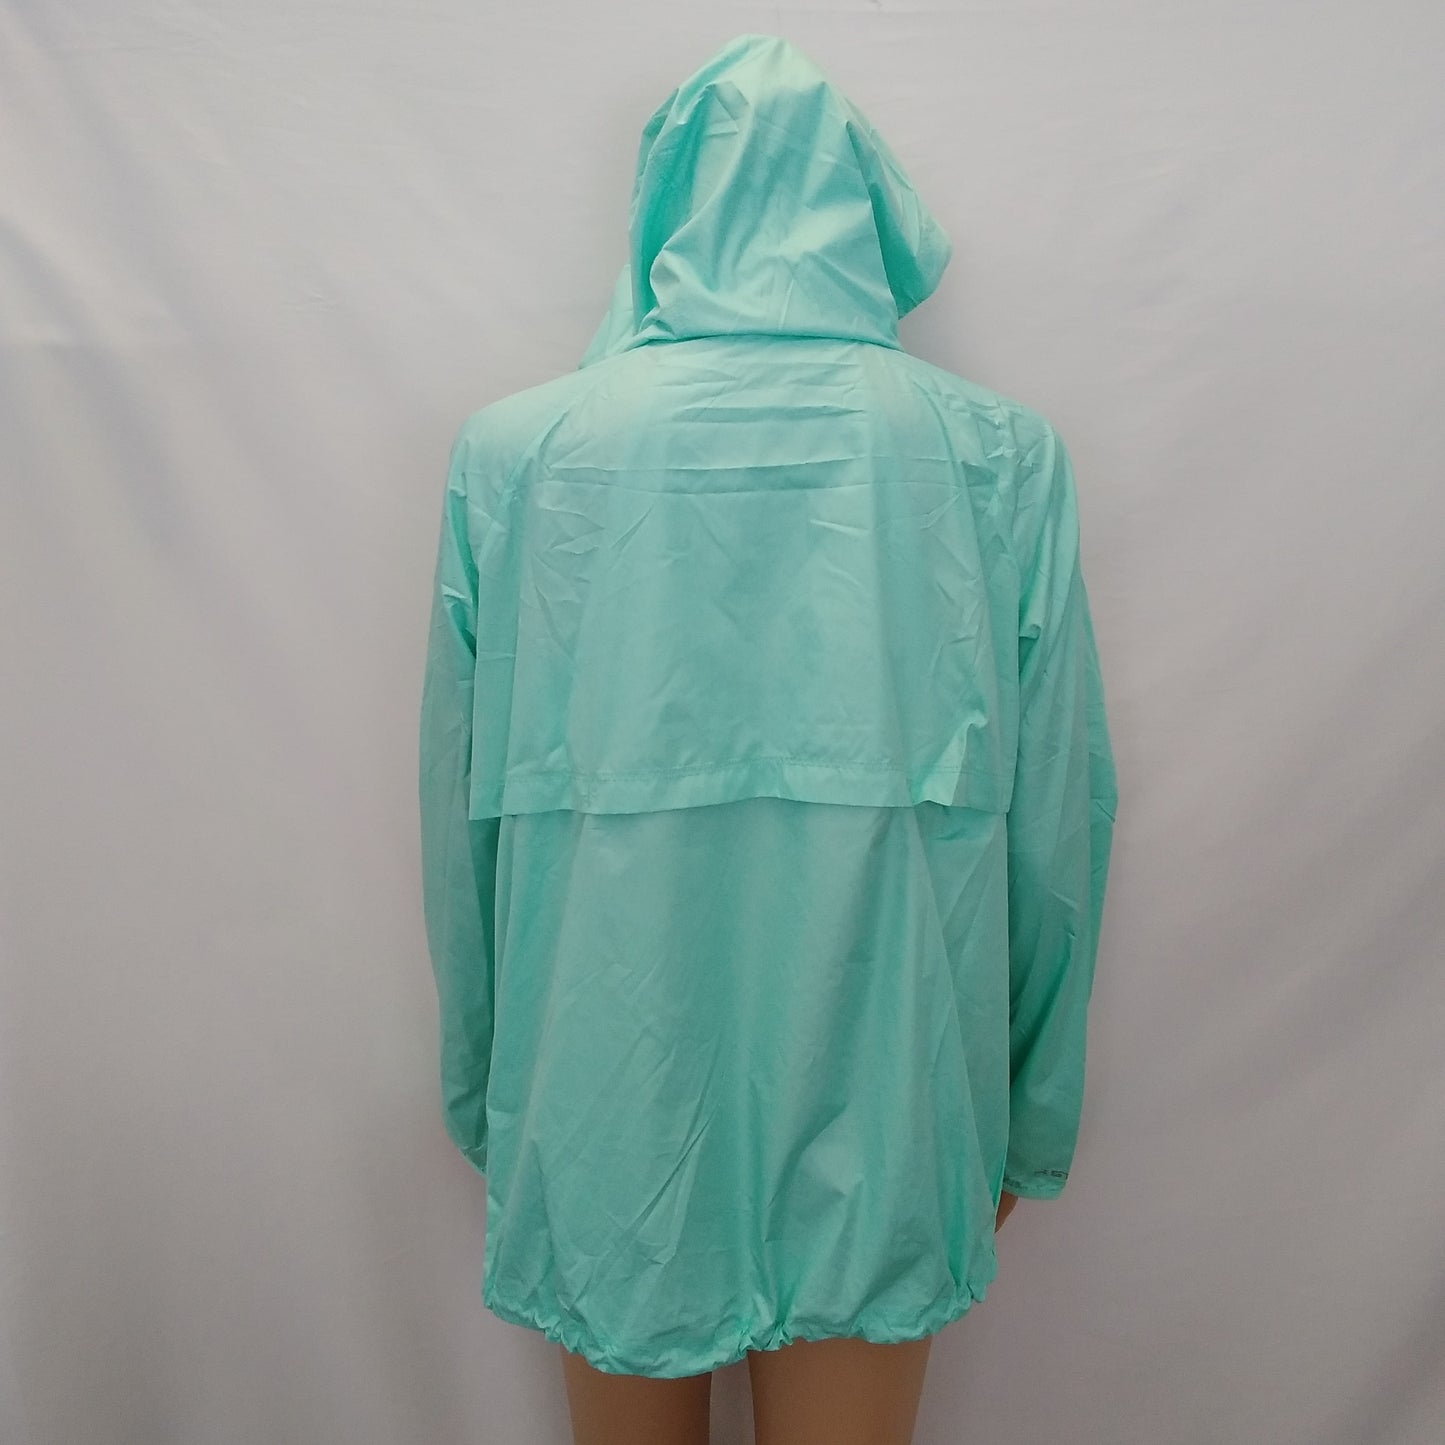 NWT - Under Armour Women's Seafoam Green Hooded Rain Jacket - Size: SM/P